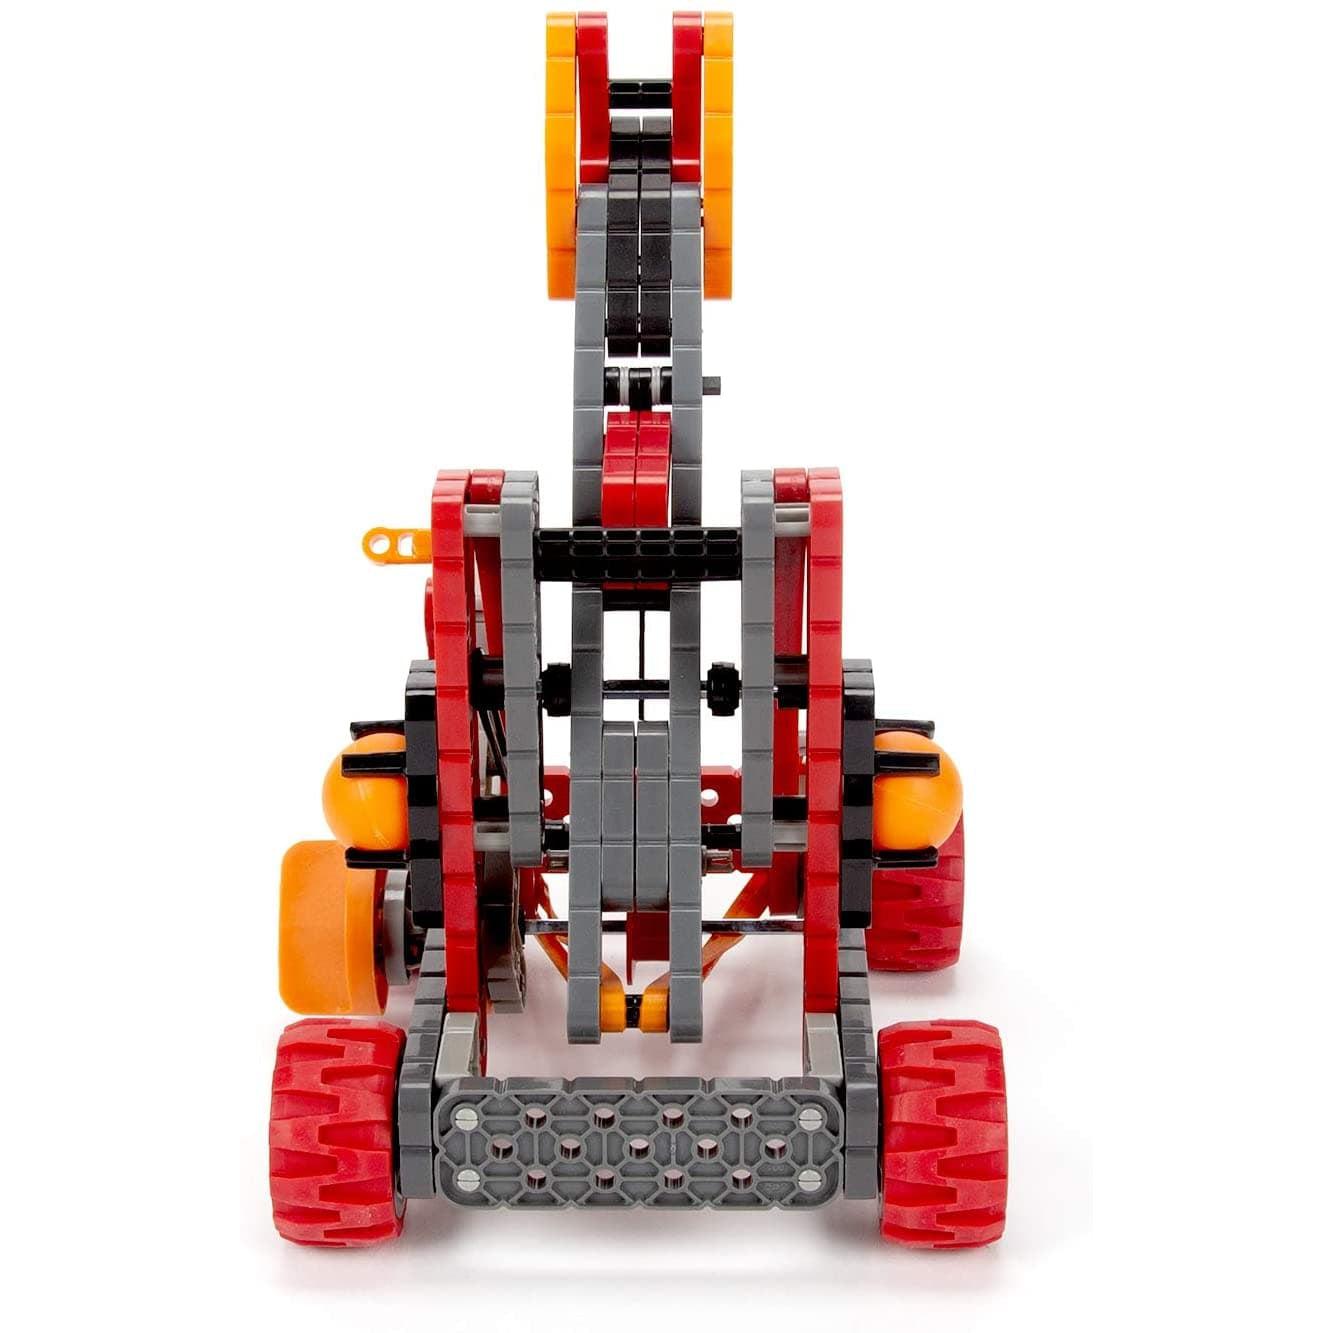 Spin Master-Vex Robotics STEM Catapult 2.0-406-6532-Legacy Toys